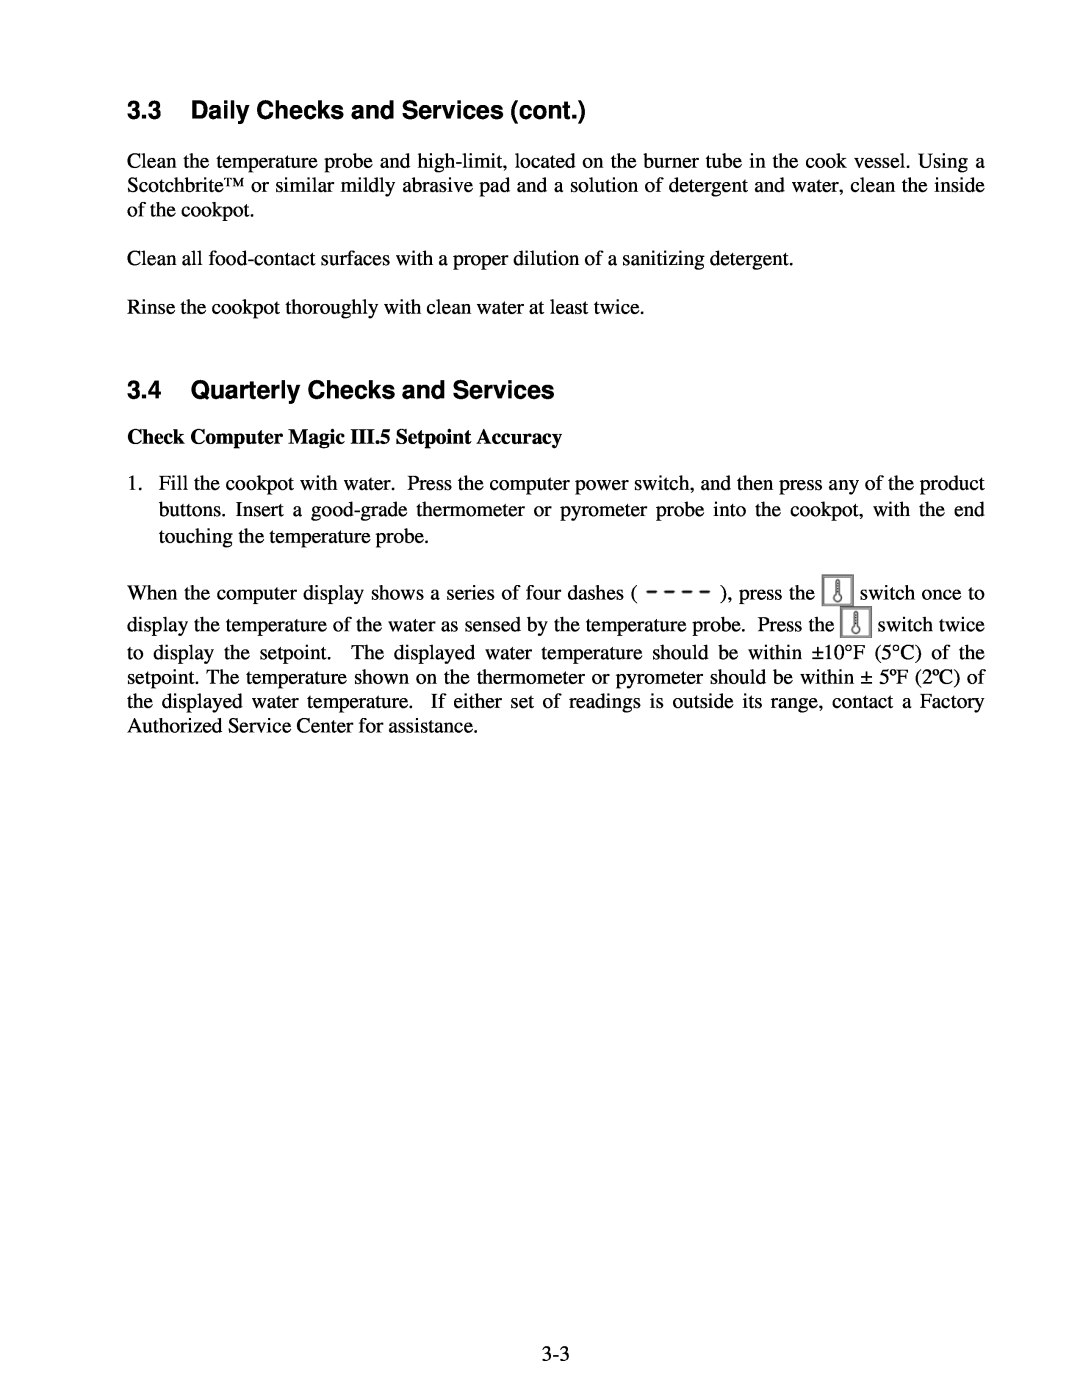 Frymaster FGP55 operation manual 3.3Daily Checks and Services cont, 3.4Quarterly Checks and Services 